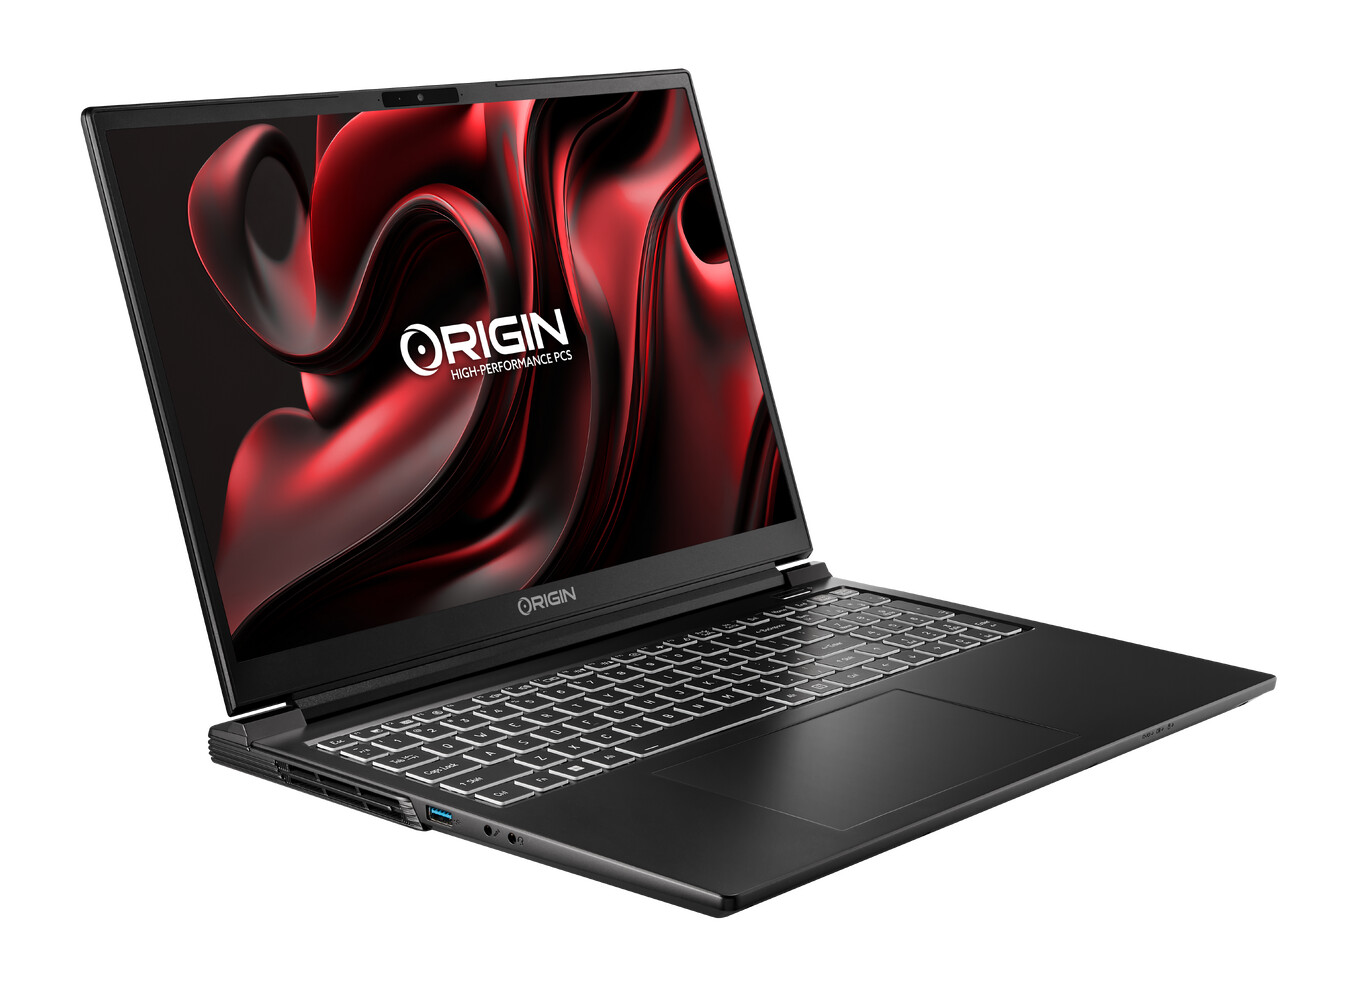 Origin PC EON17-SLX, GTX 970M -  External Reviews